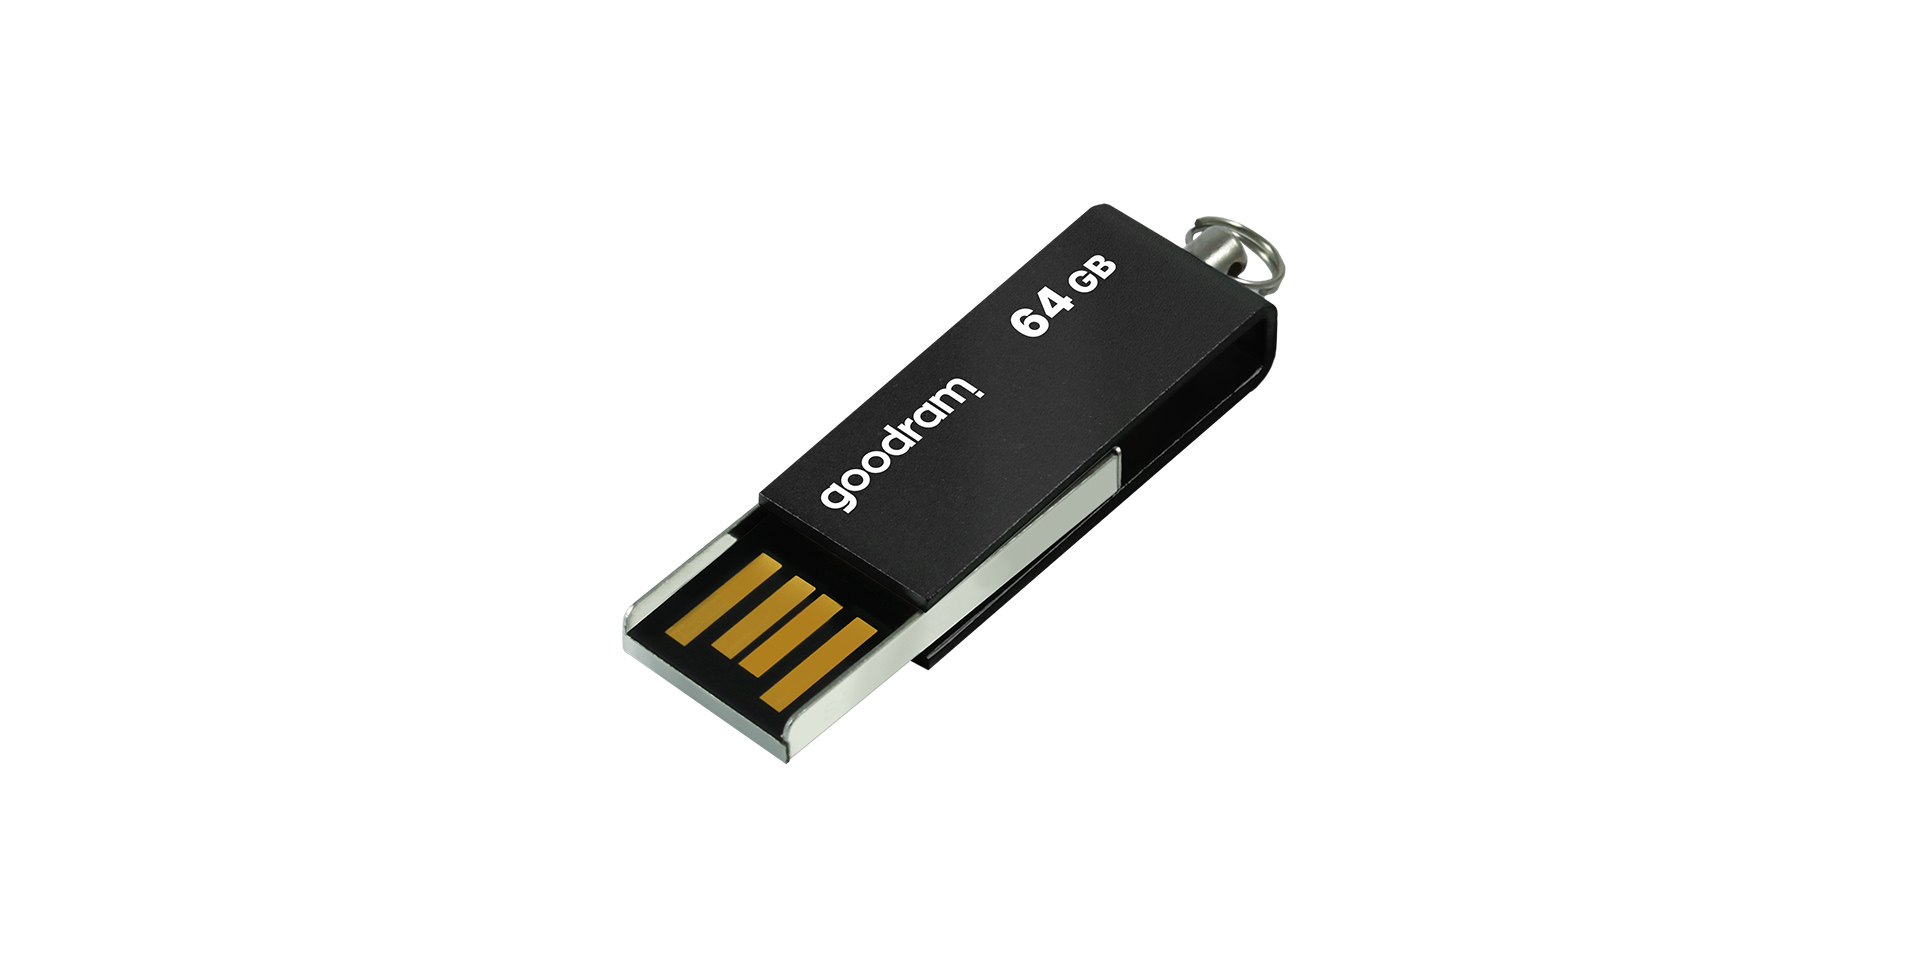 16GB USB 2.0 Black - UCU2